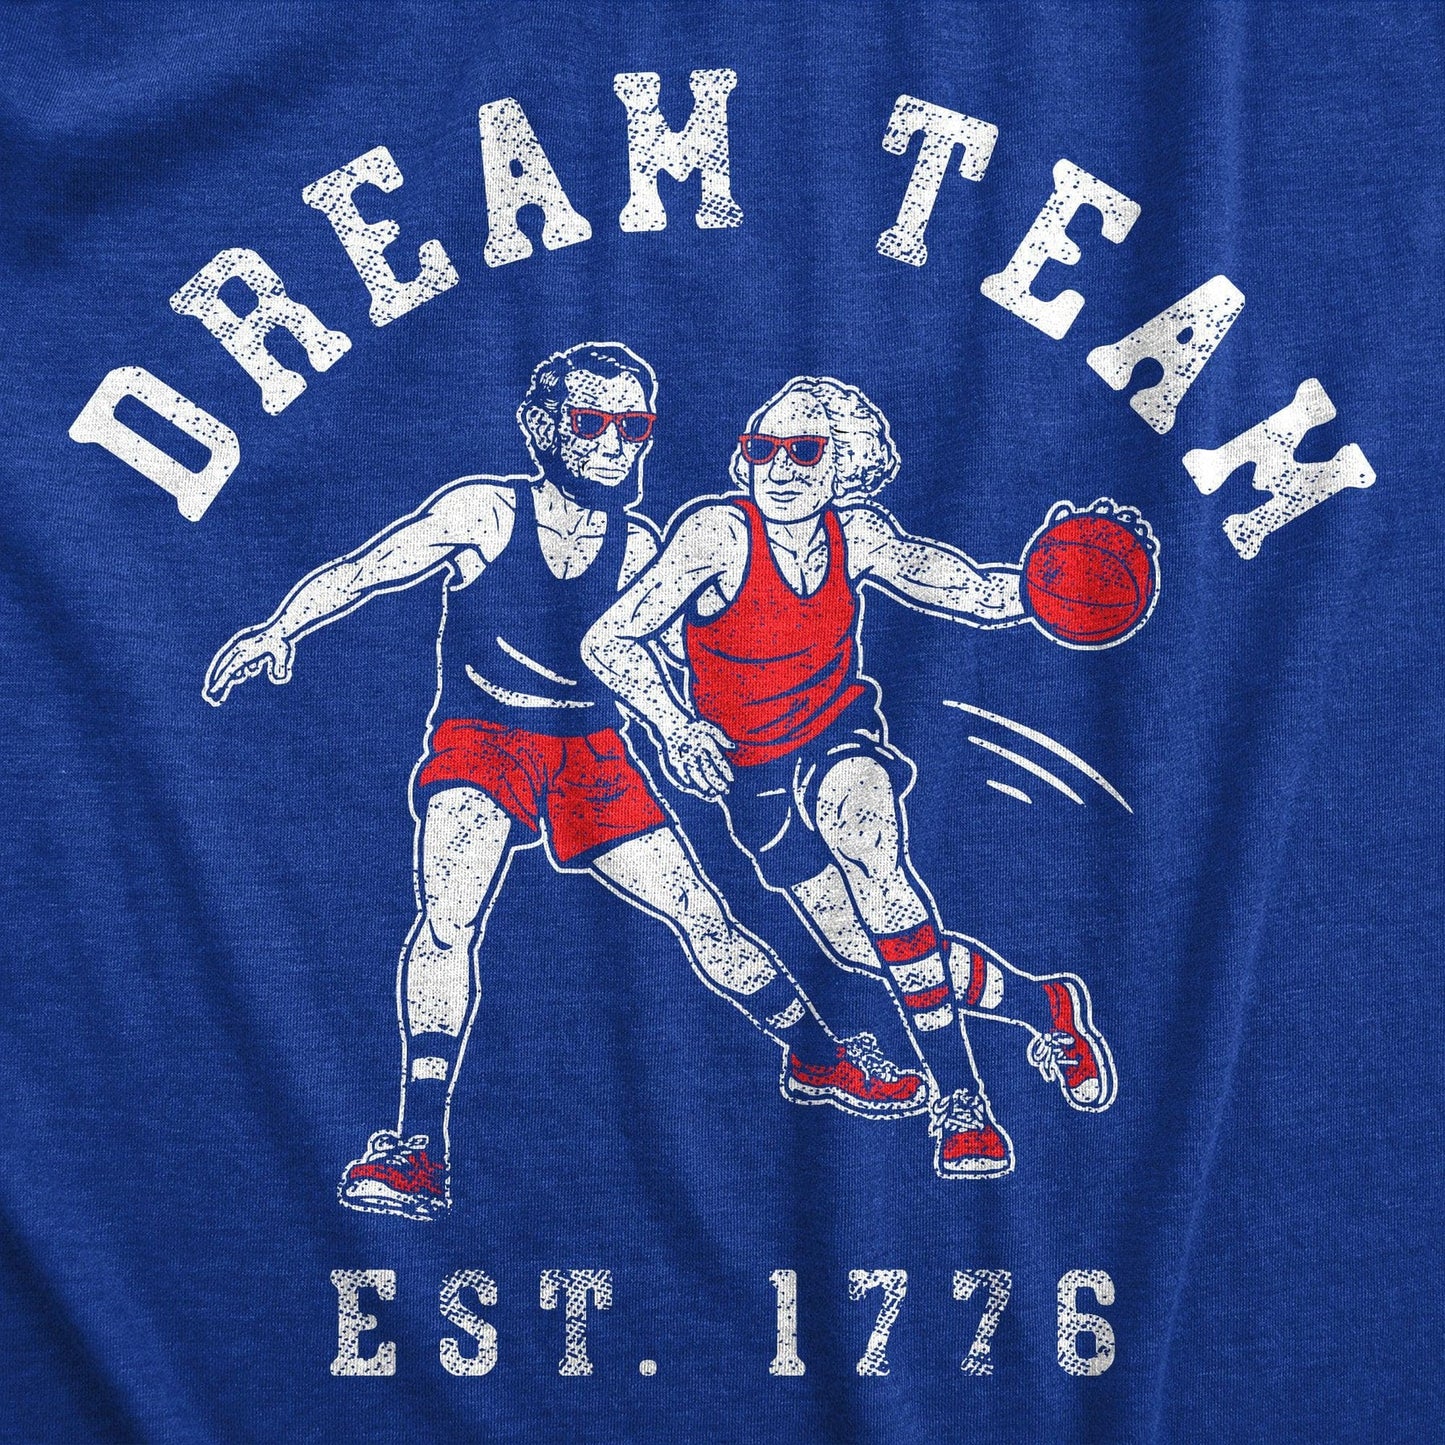 Dream Team 1776 Men's T-Shirt